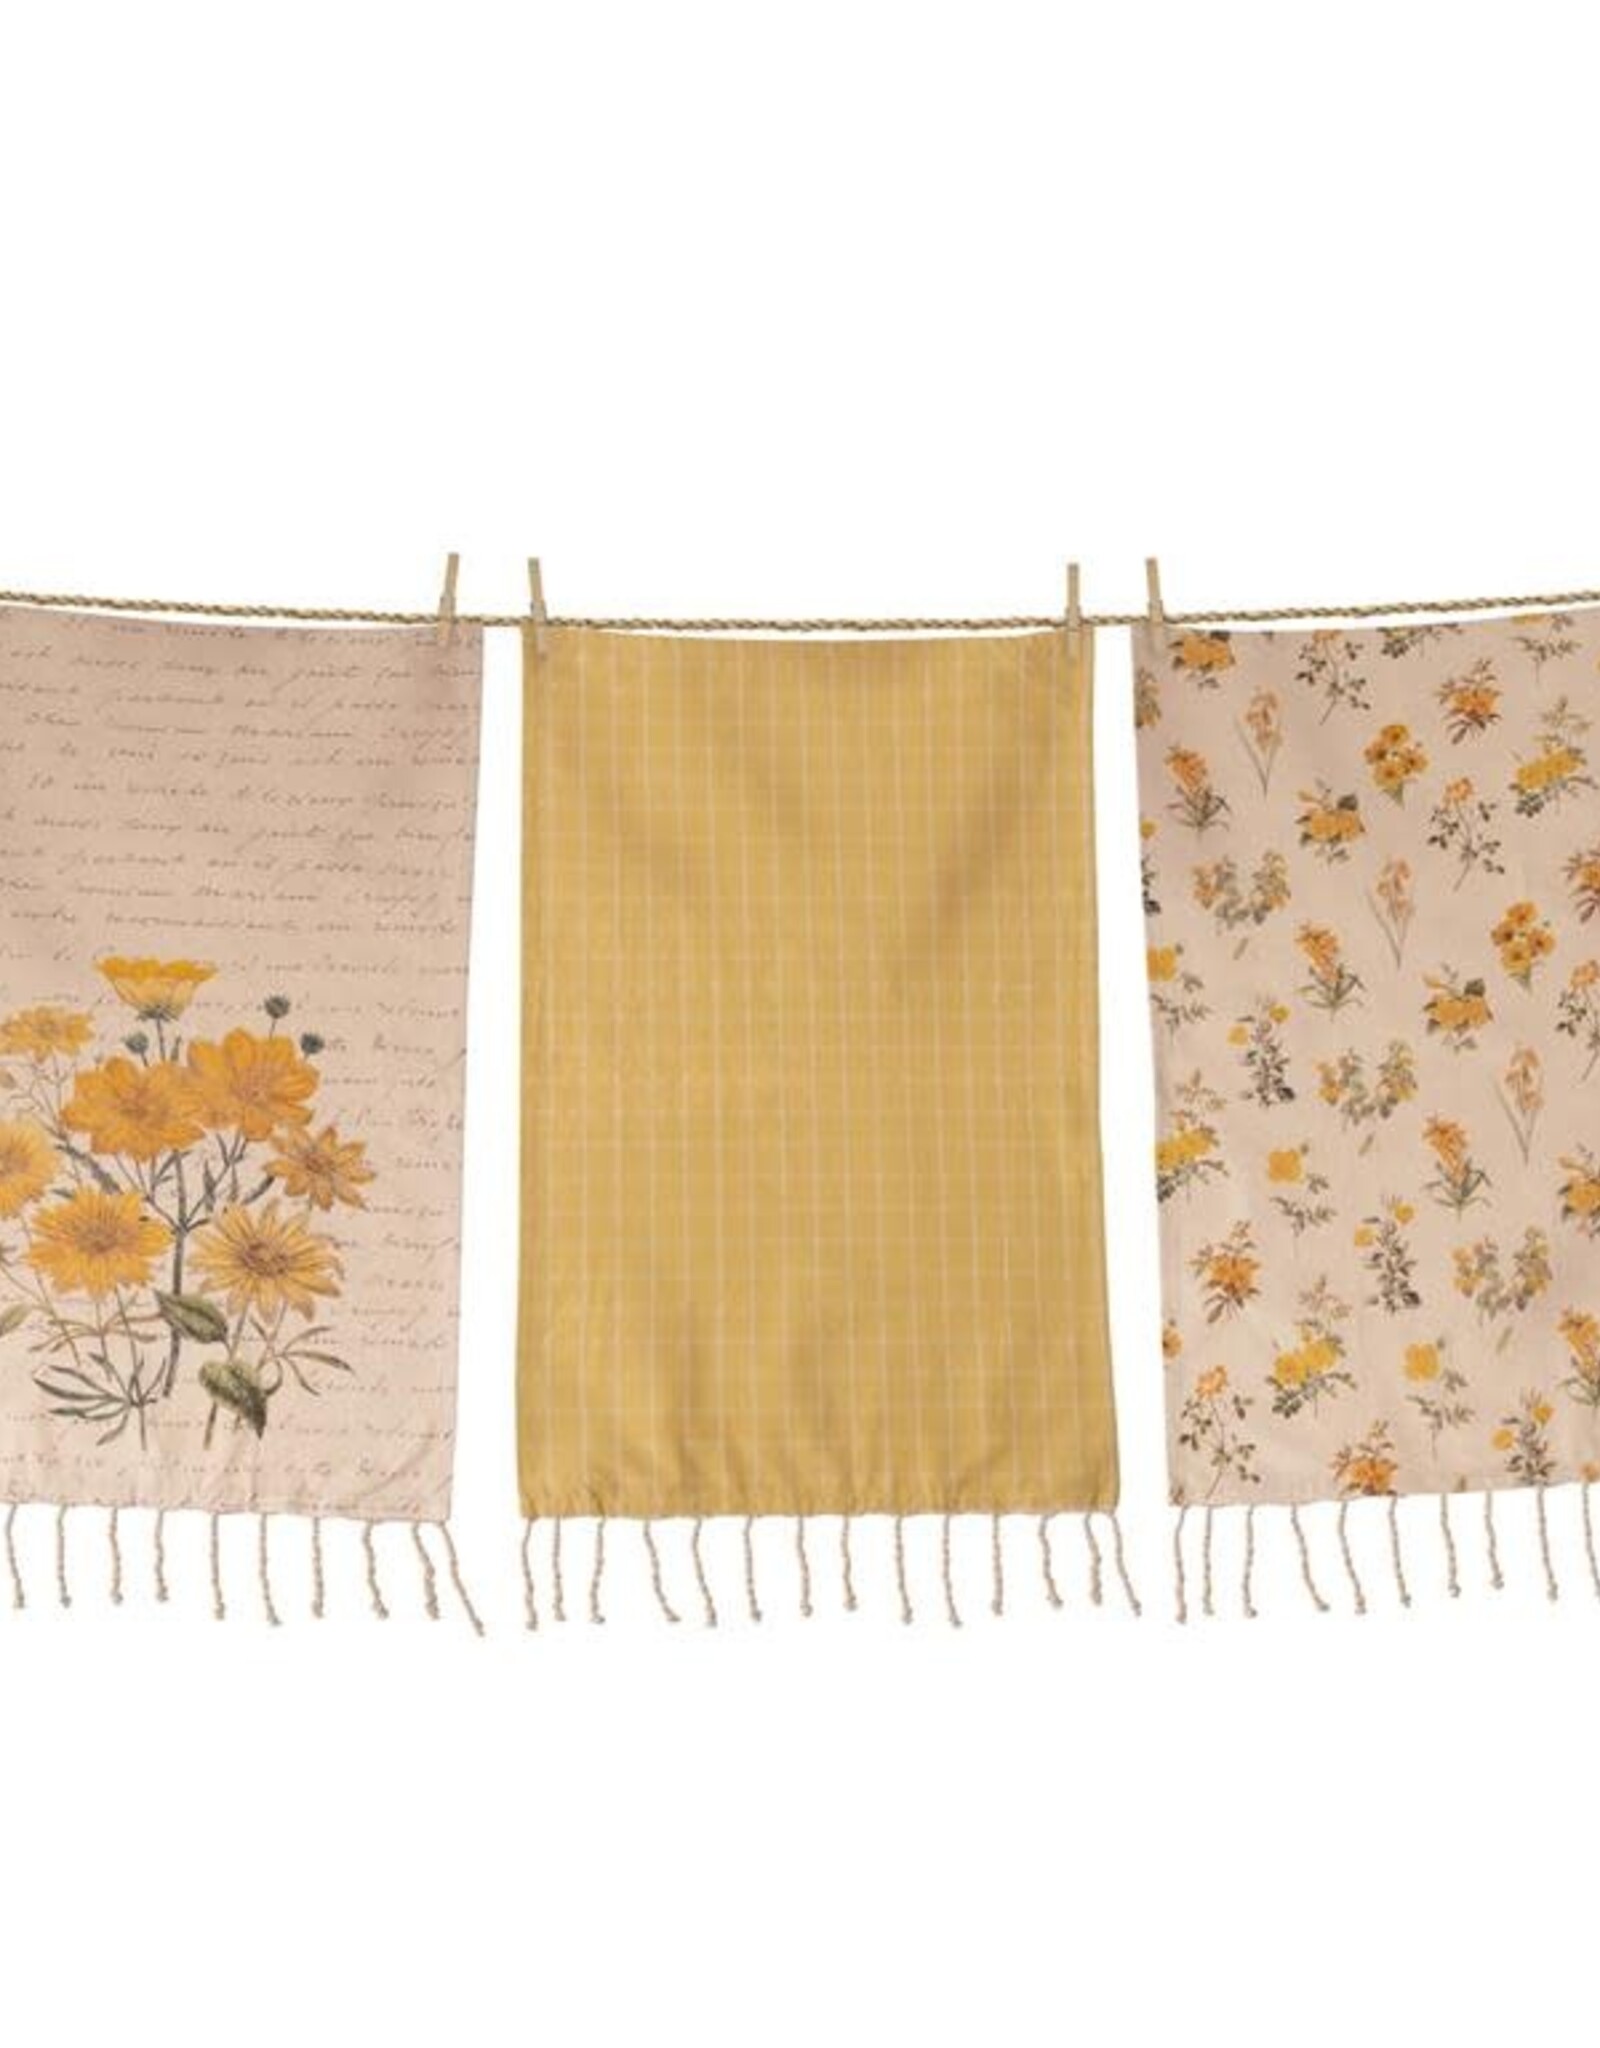 Tea Towels - Yellow Flowers 3pk